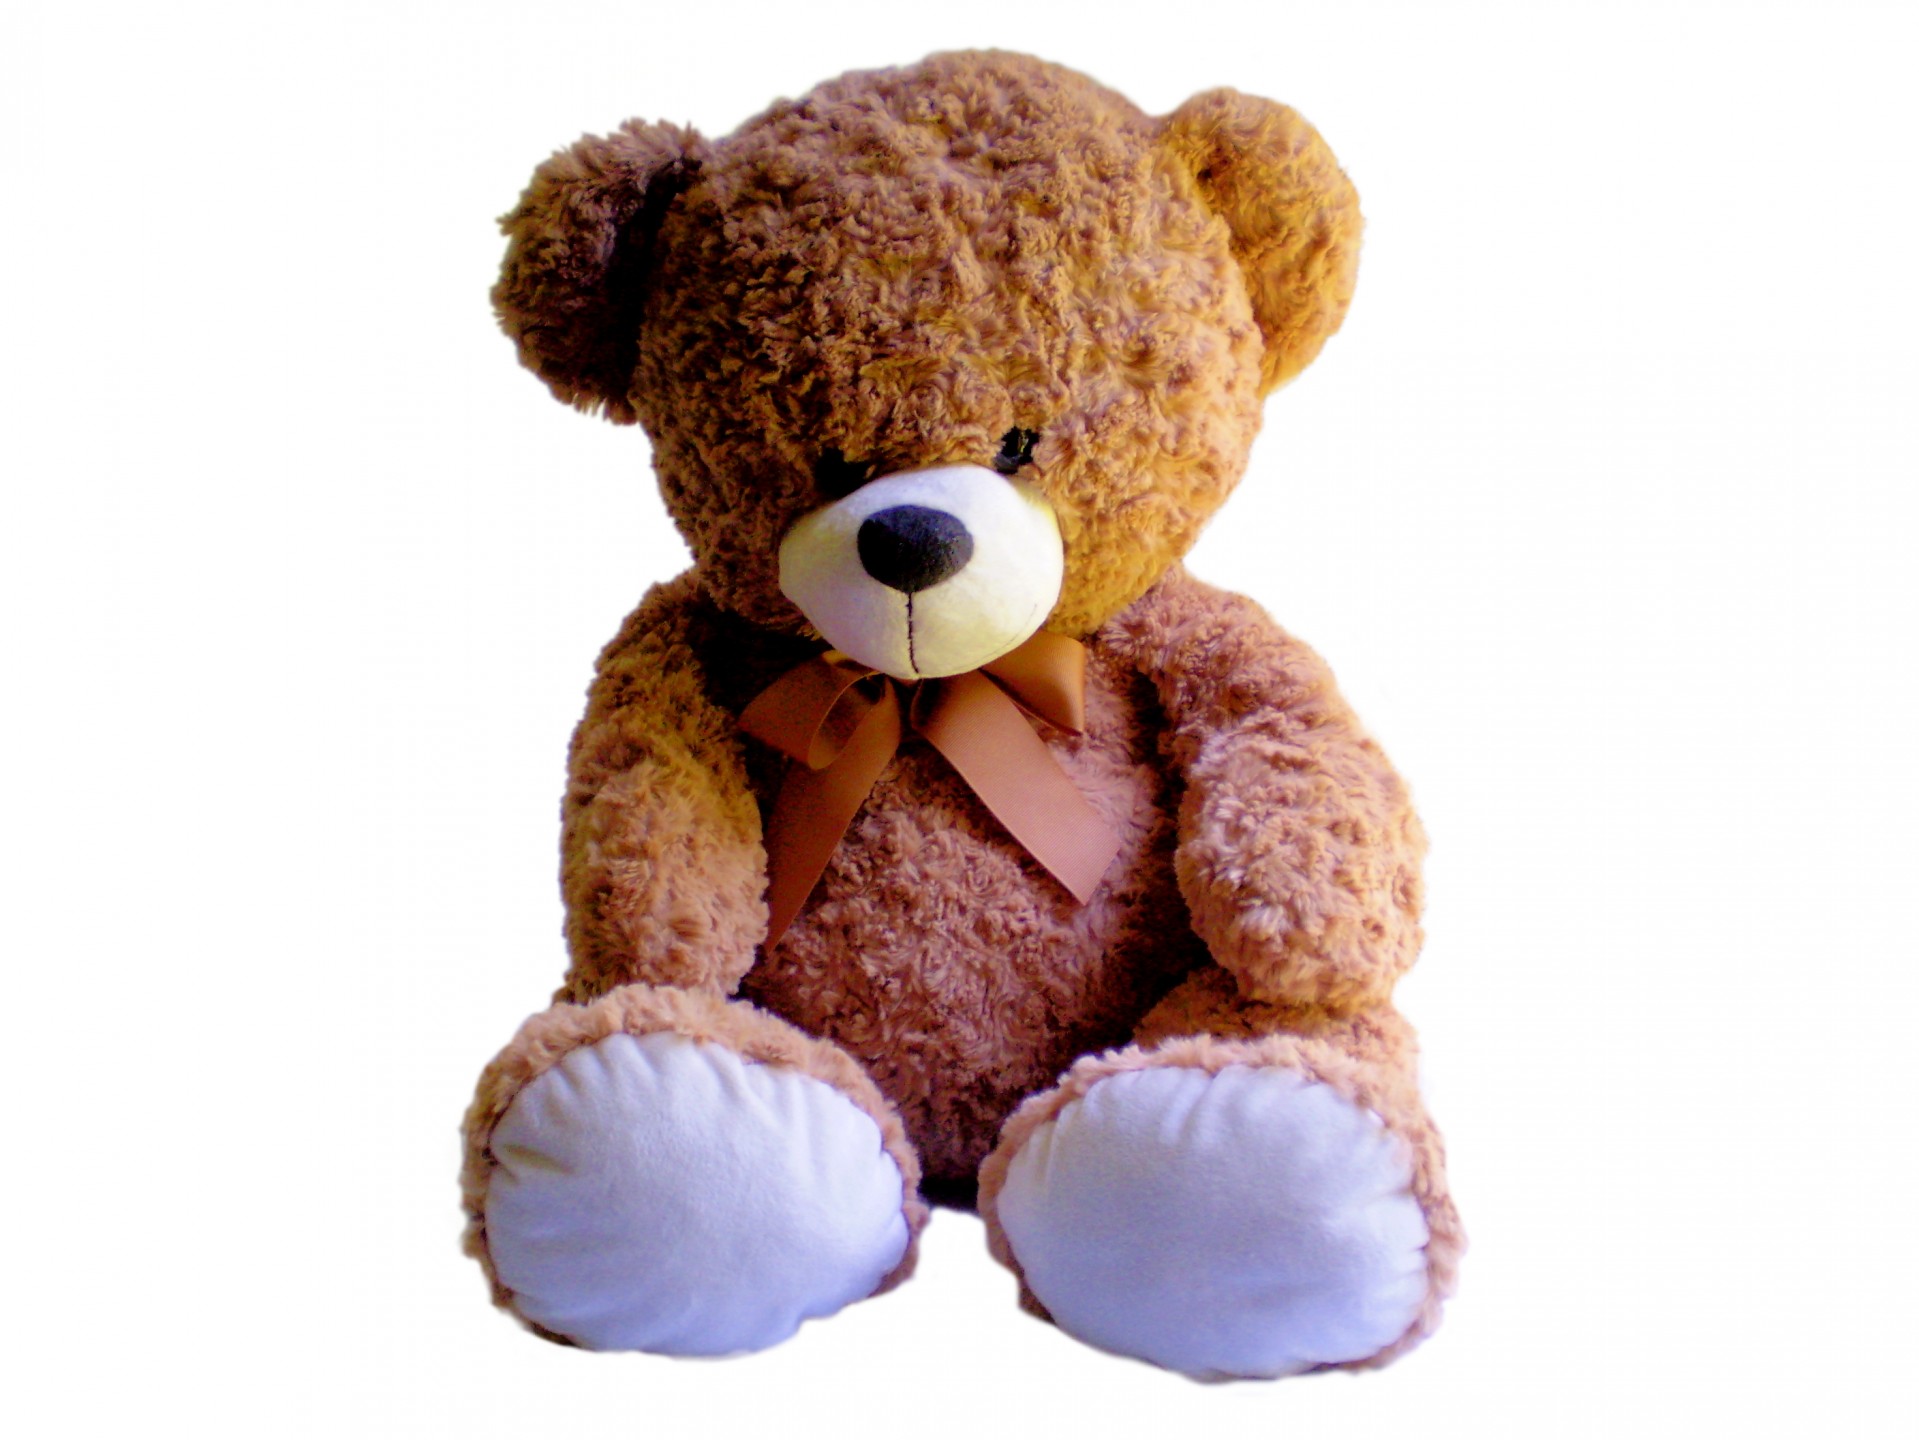 Teddy Bear Plush Toy Free Photo. 